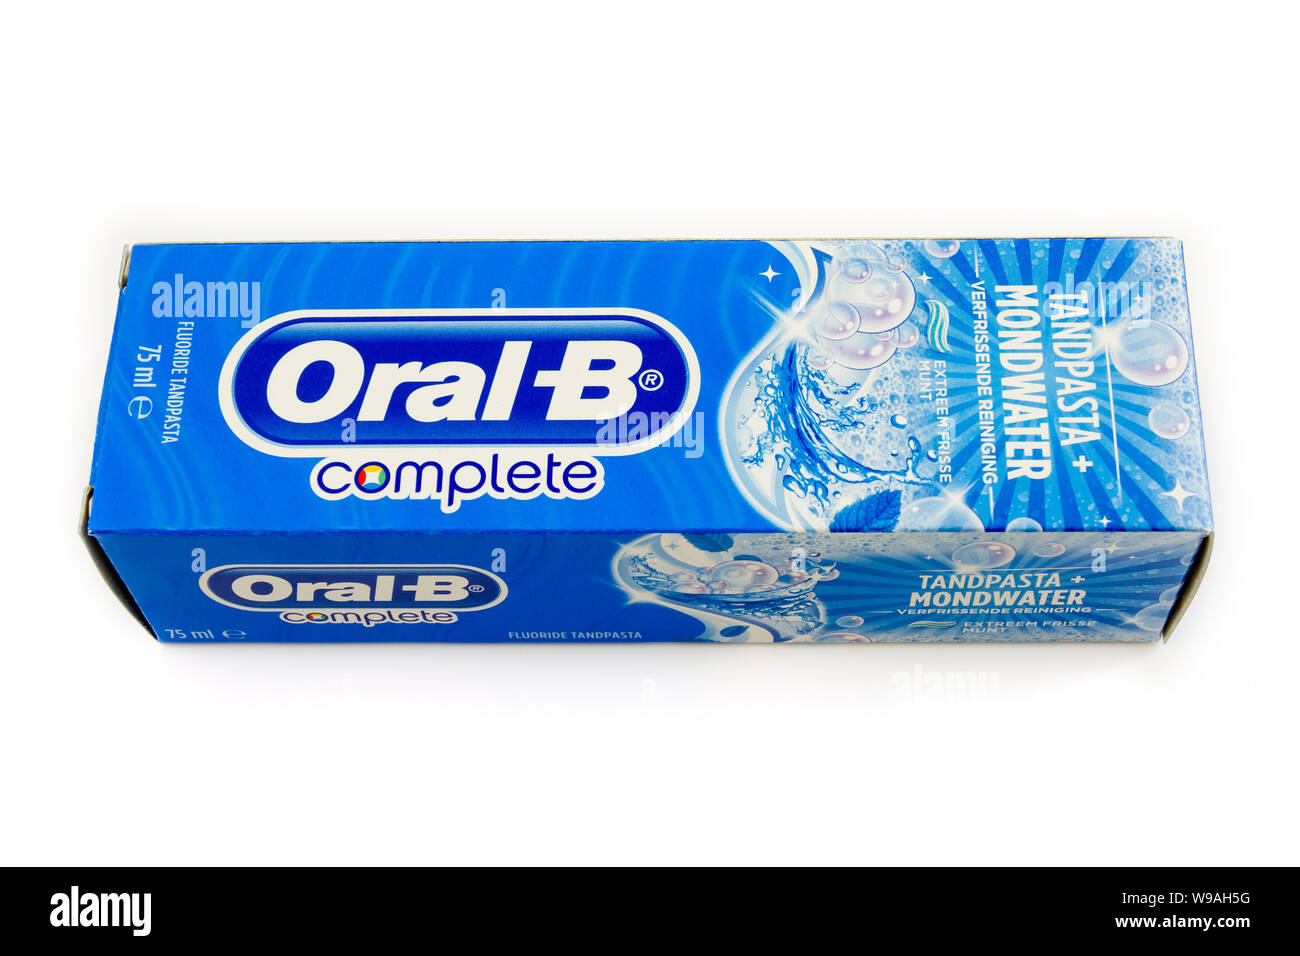 oral-b-brand-toothpaste-box-W9AH5G.jpg